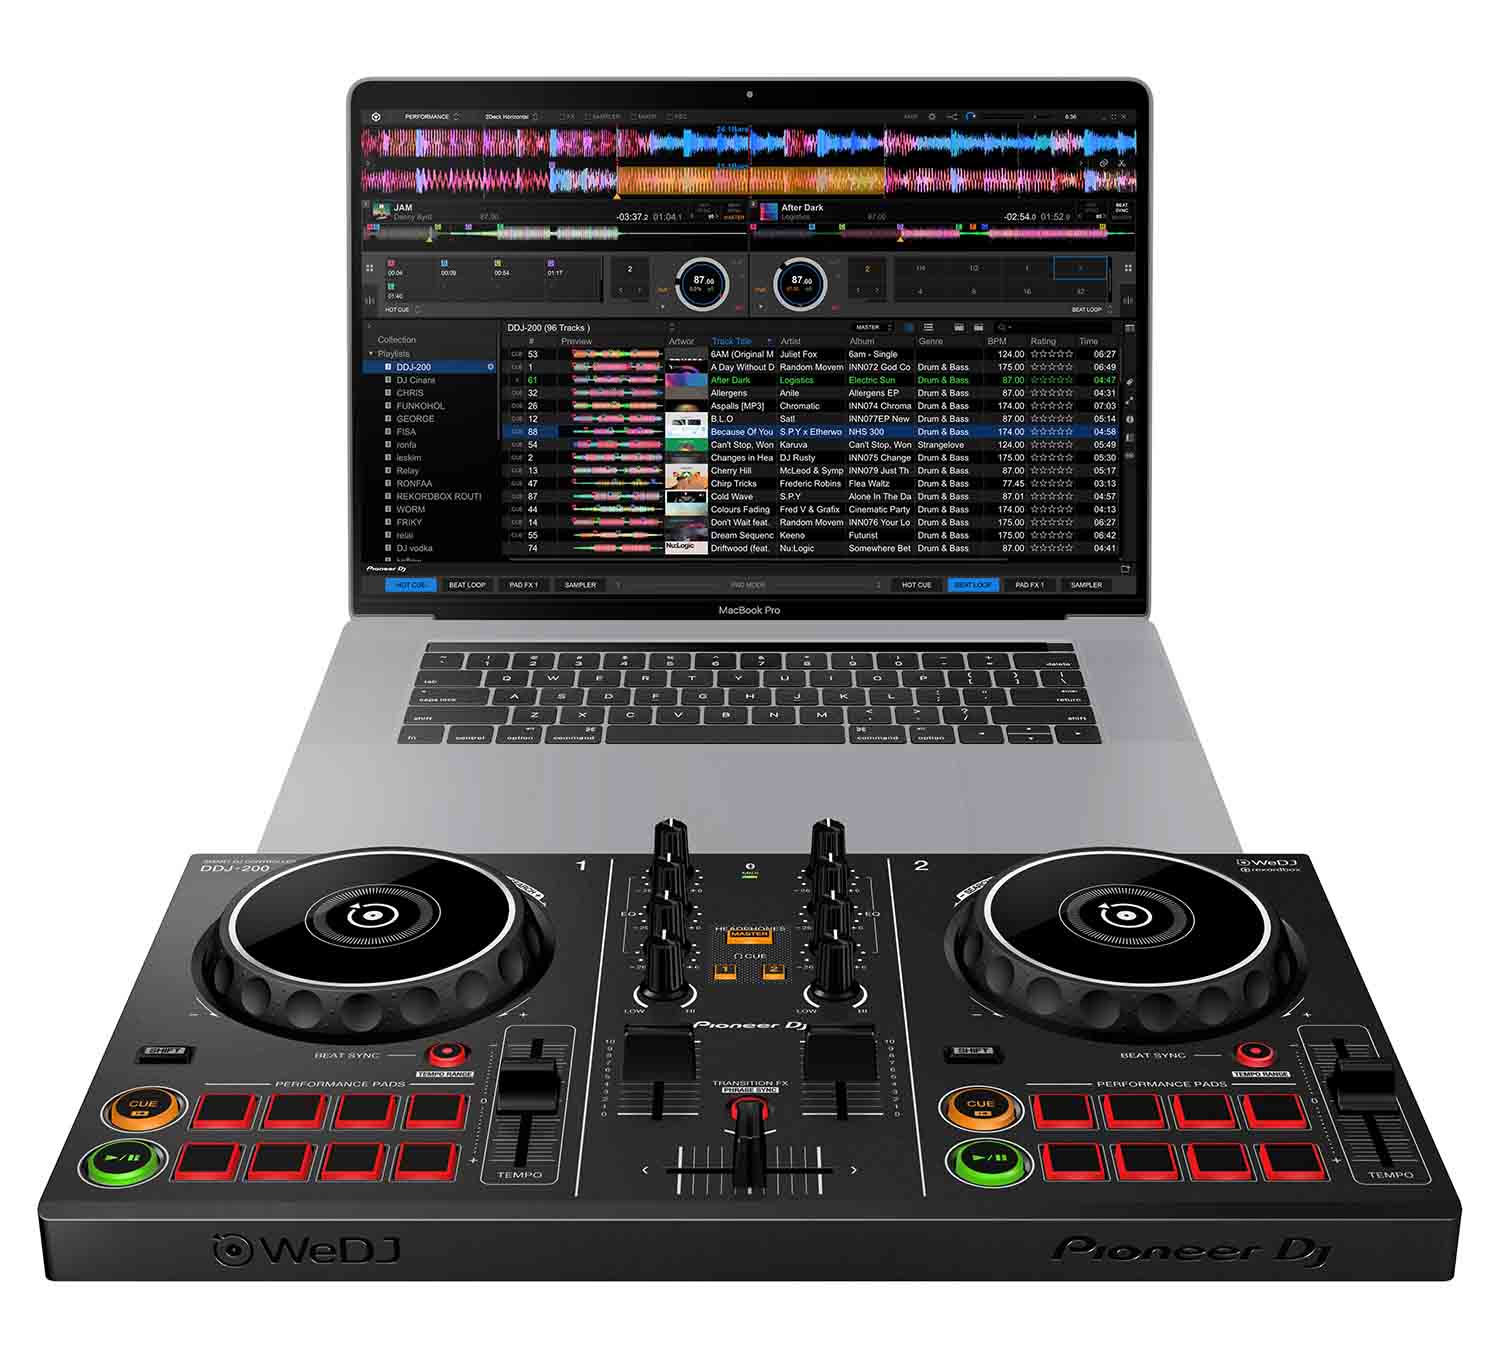 Pioneer DDJ-200, 2-Channel Smart DJ Controller - Hollywood DJ